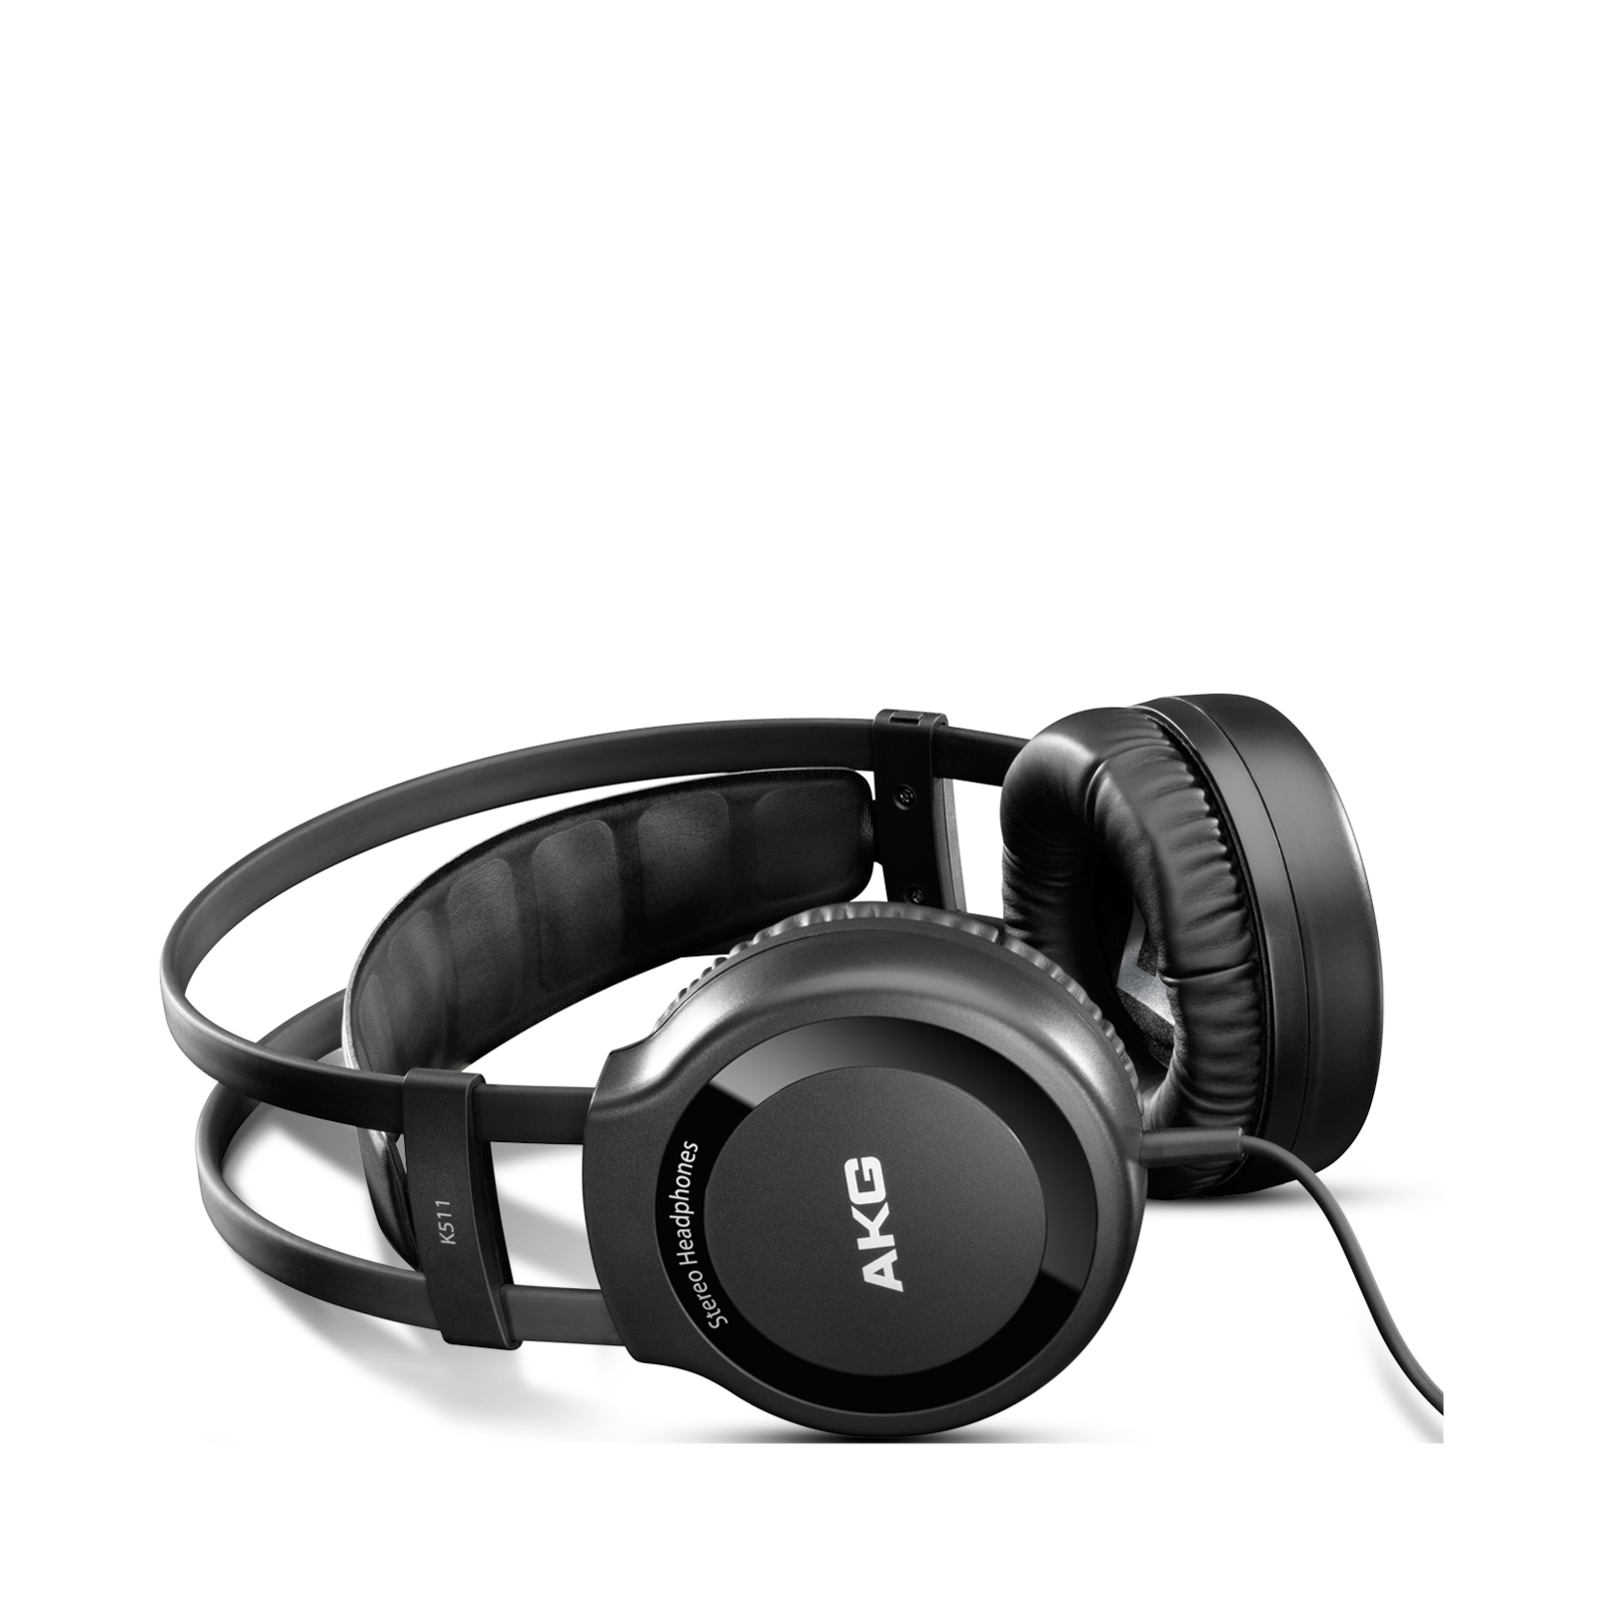 K 511 - Black - Natural sound stereo headphones with great audio balance - Detailshot 1